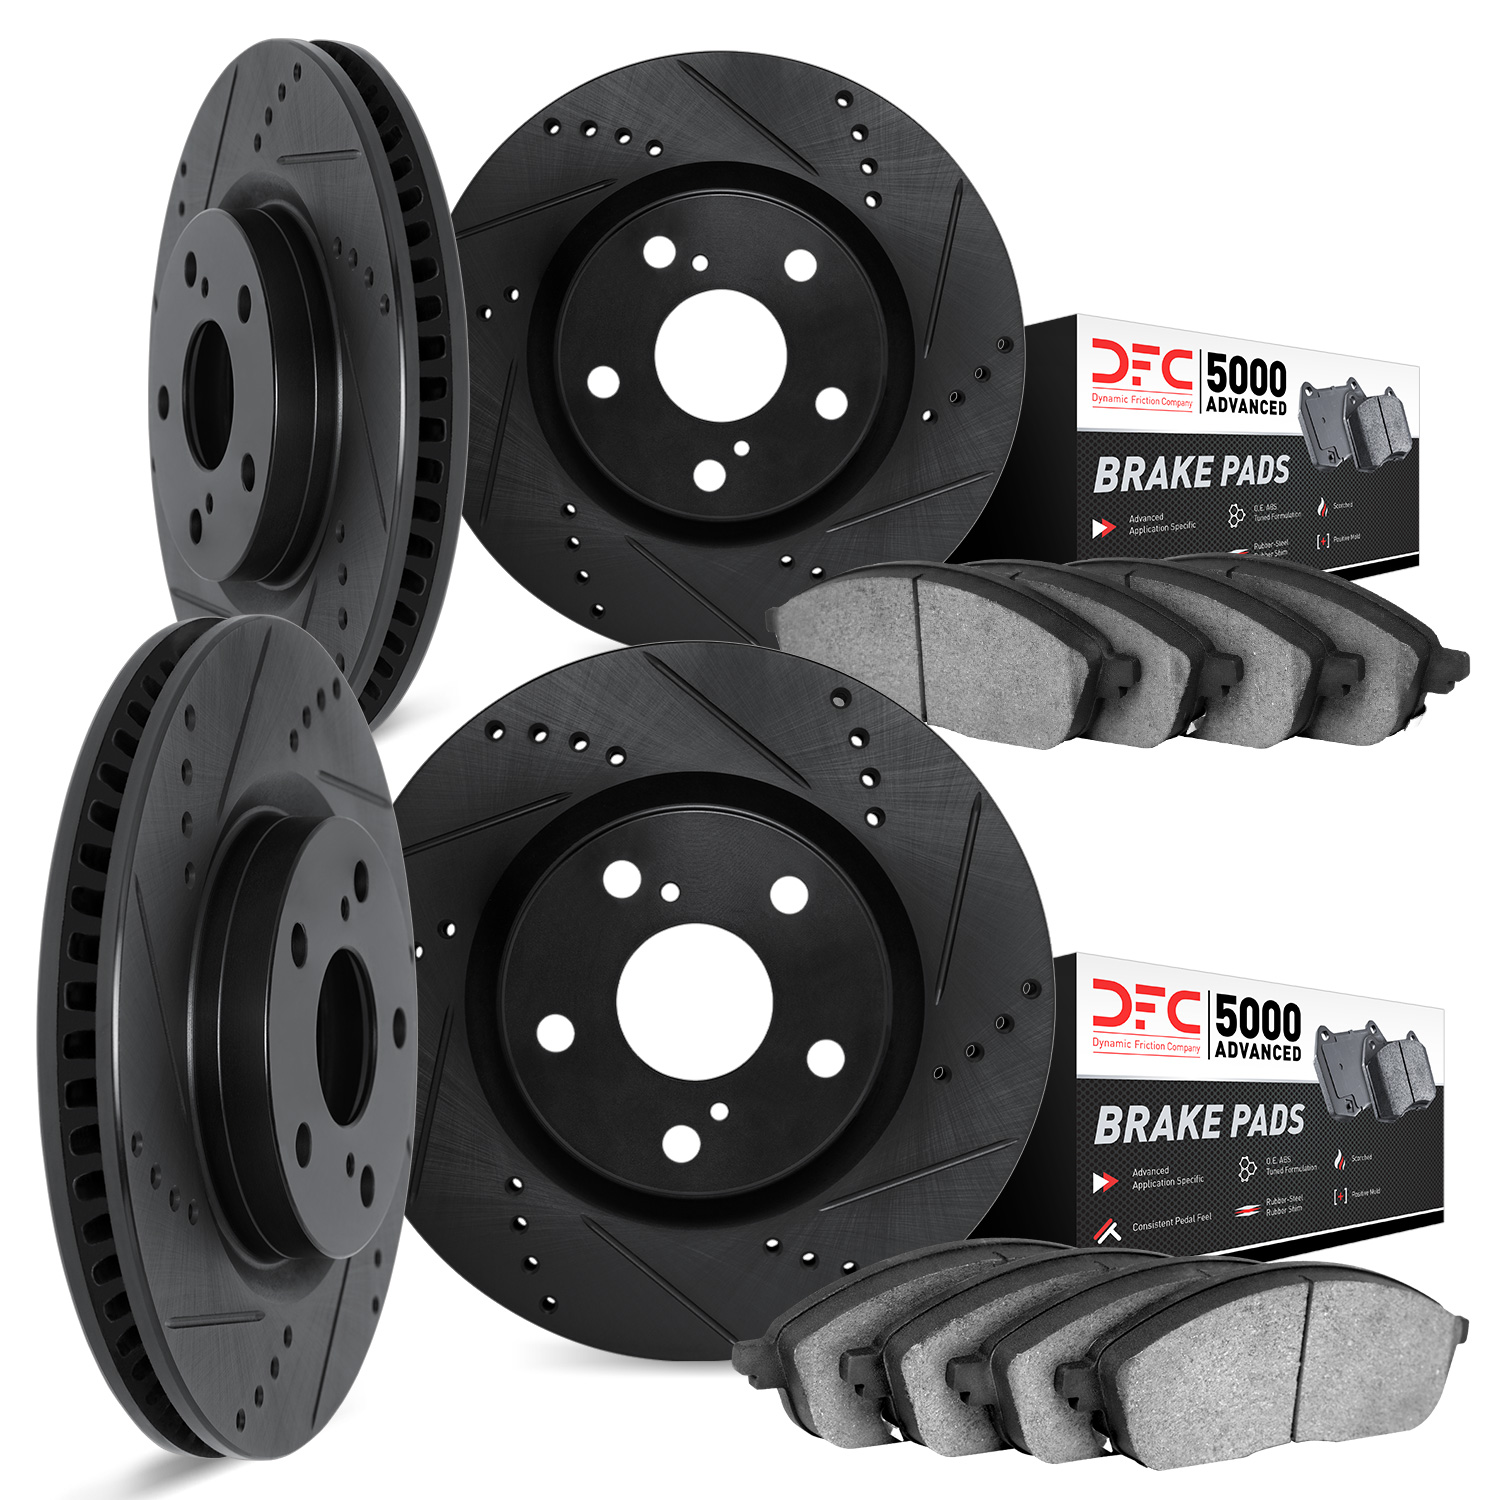 8504-80048 Drilled/Slotted Brake Rotors w/5000 Advanced Brake Pads Kit [Black], 2007-2012 Ford/Lincoln/Mercury/Mazda, Position: